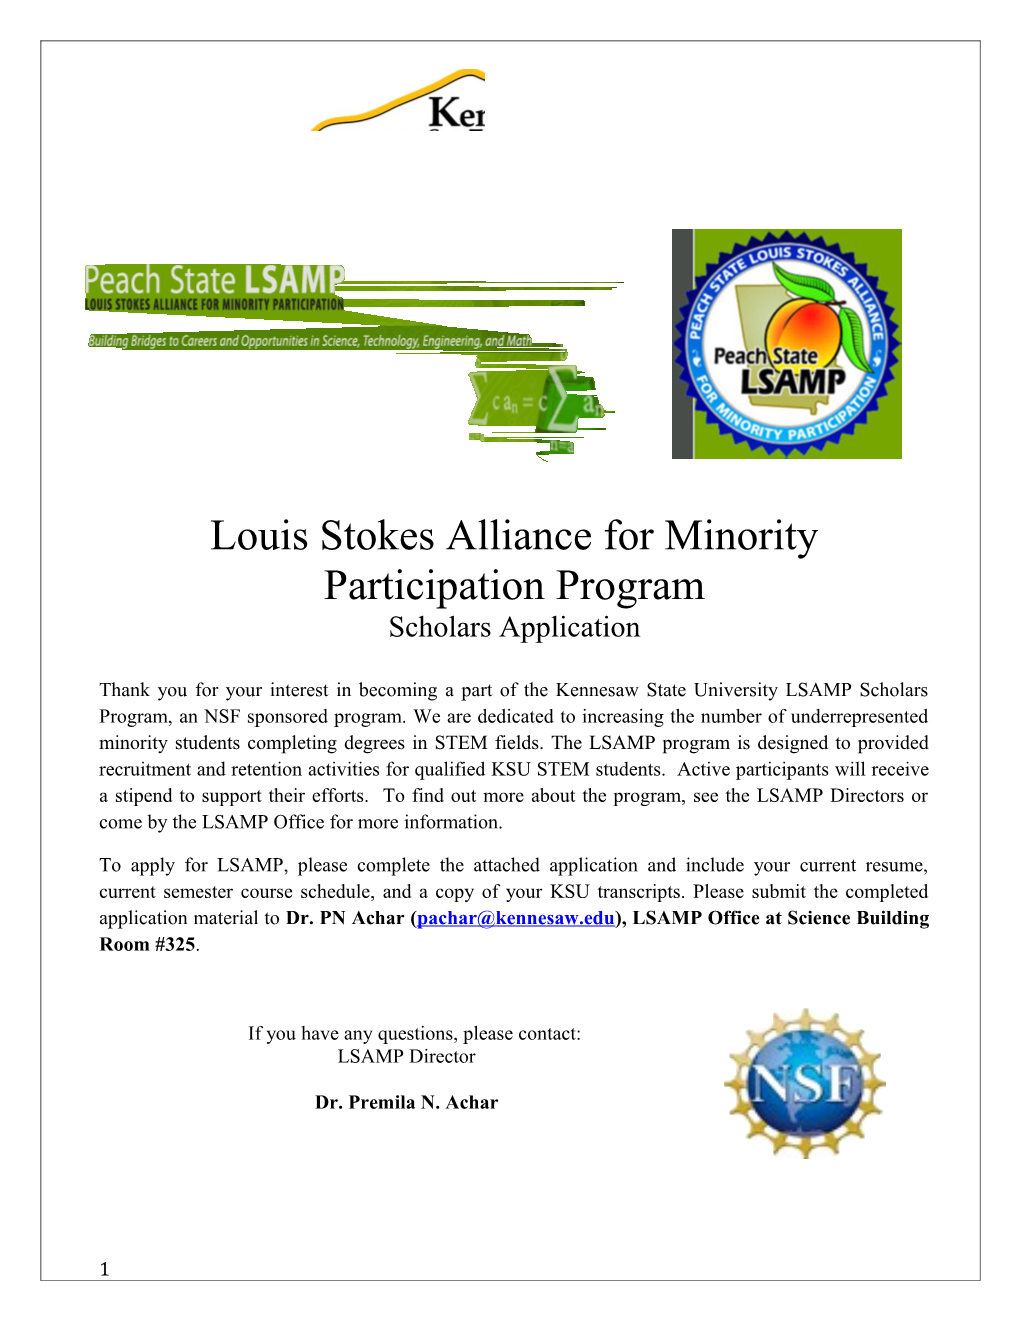 Louis Stokes Alliance for Minority Participation Program